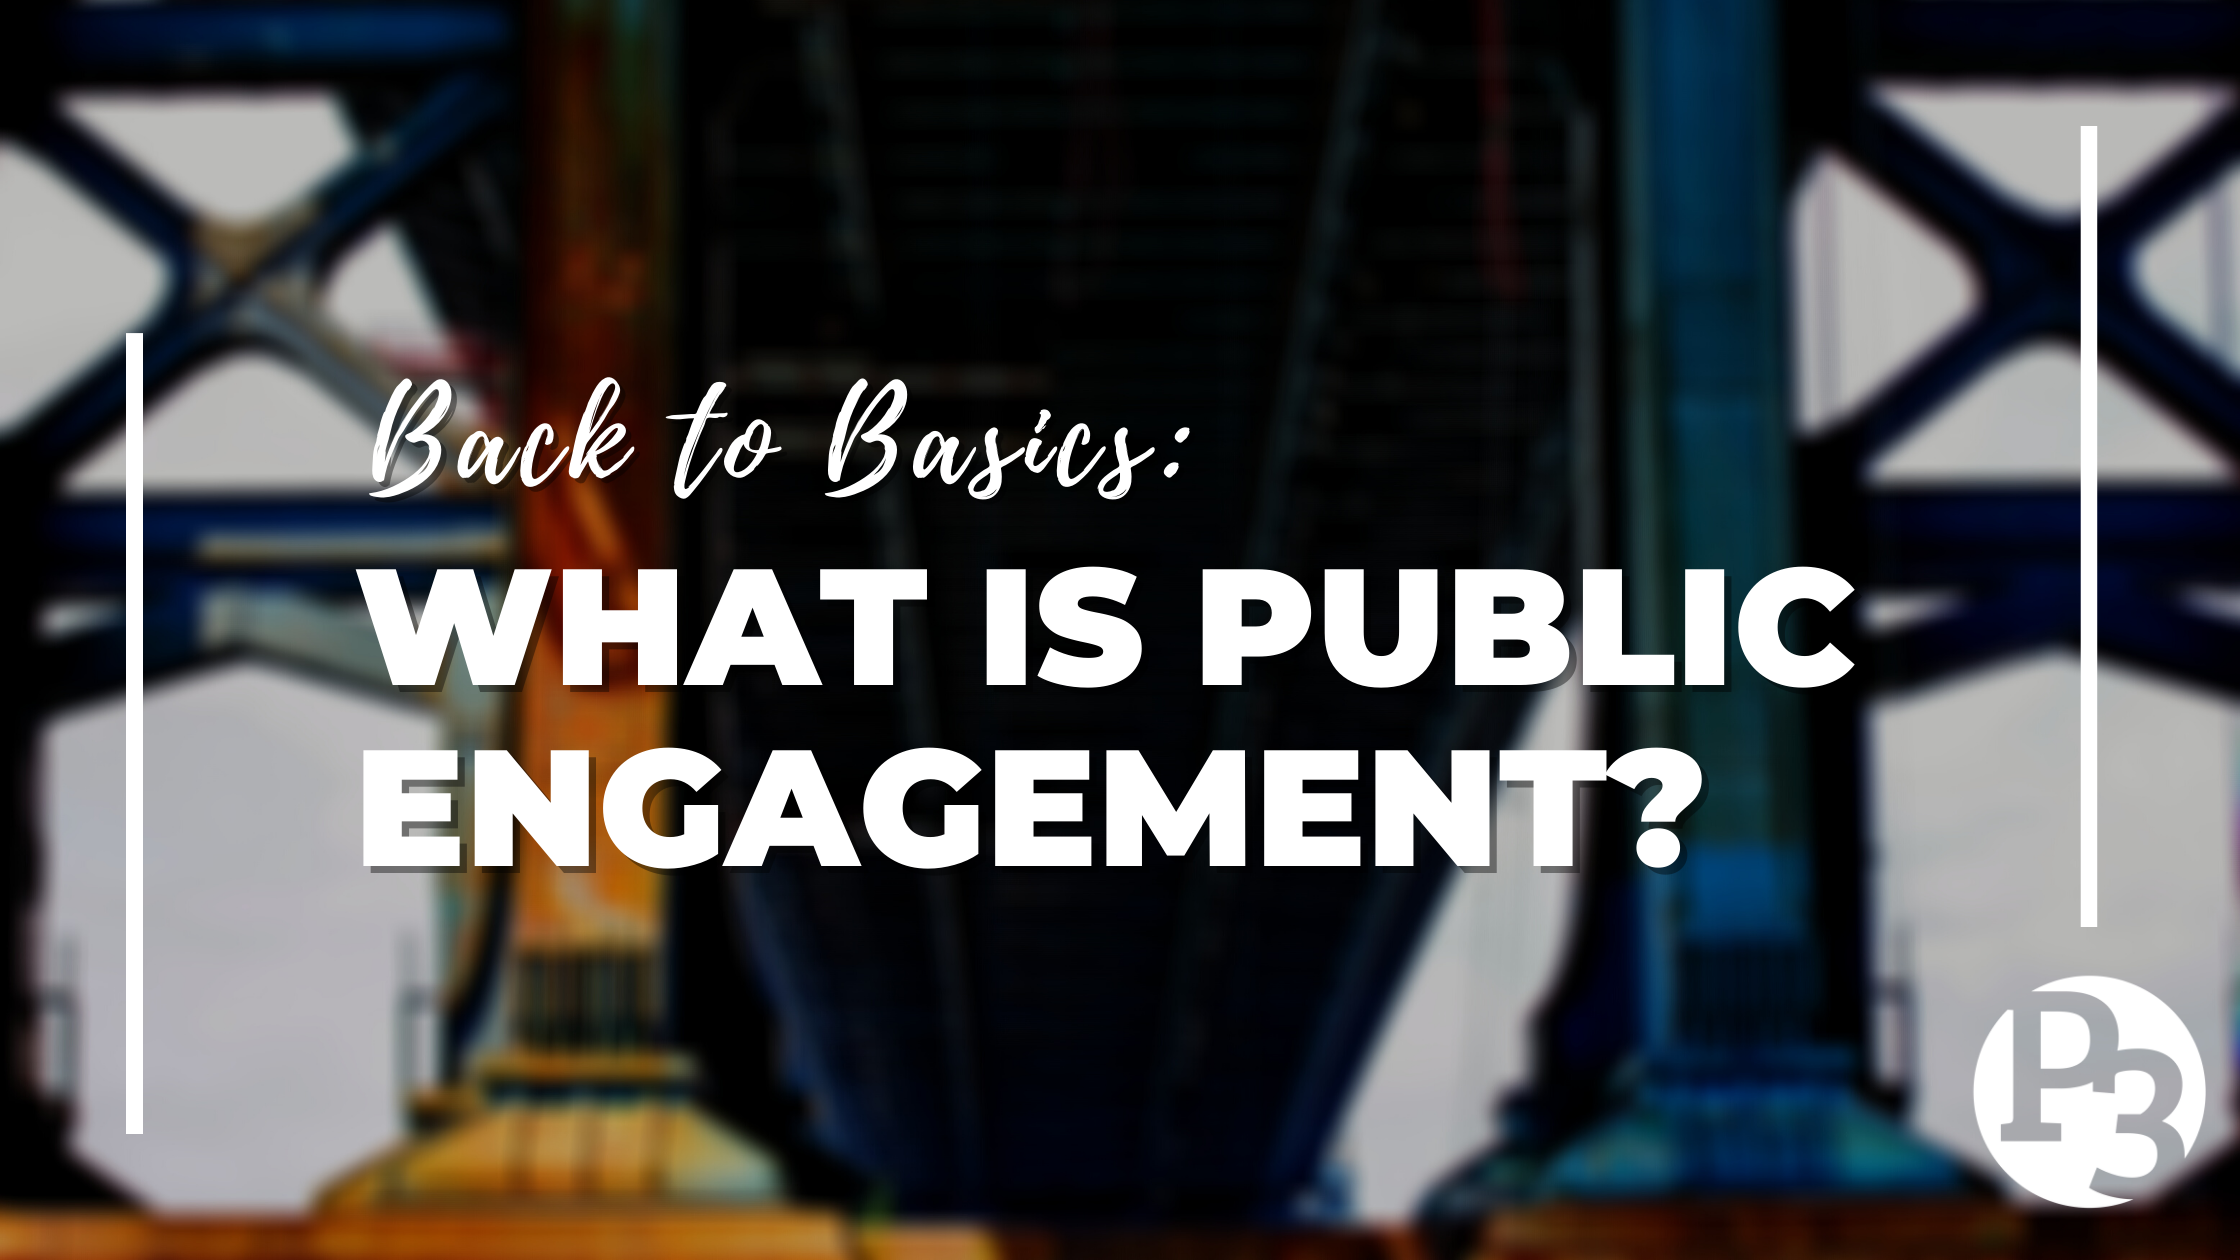 Back to Basics: What is Public Engagement?